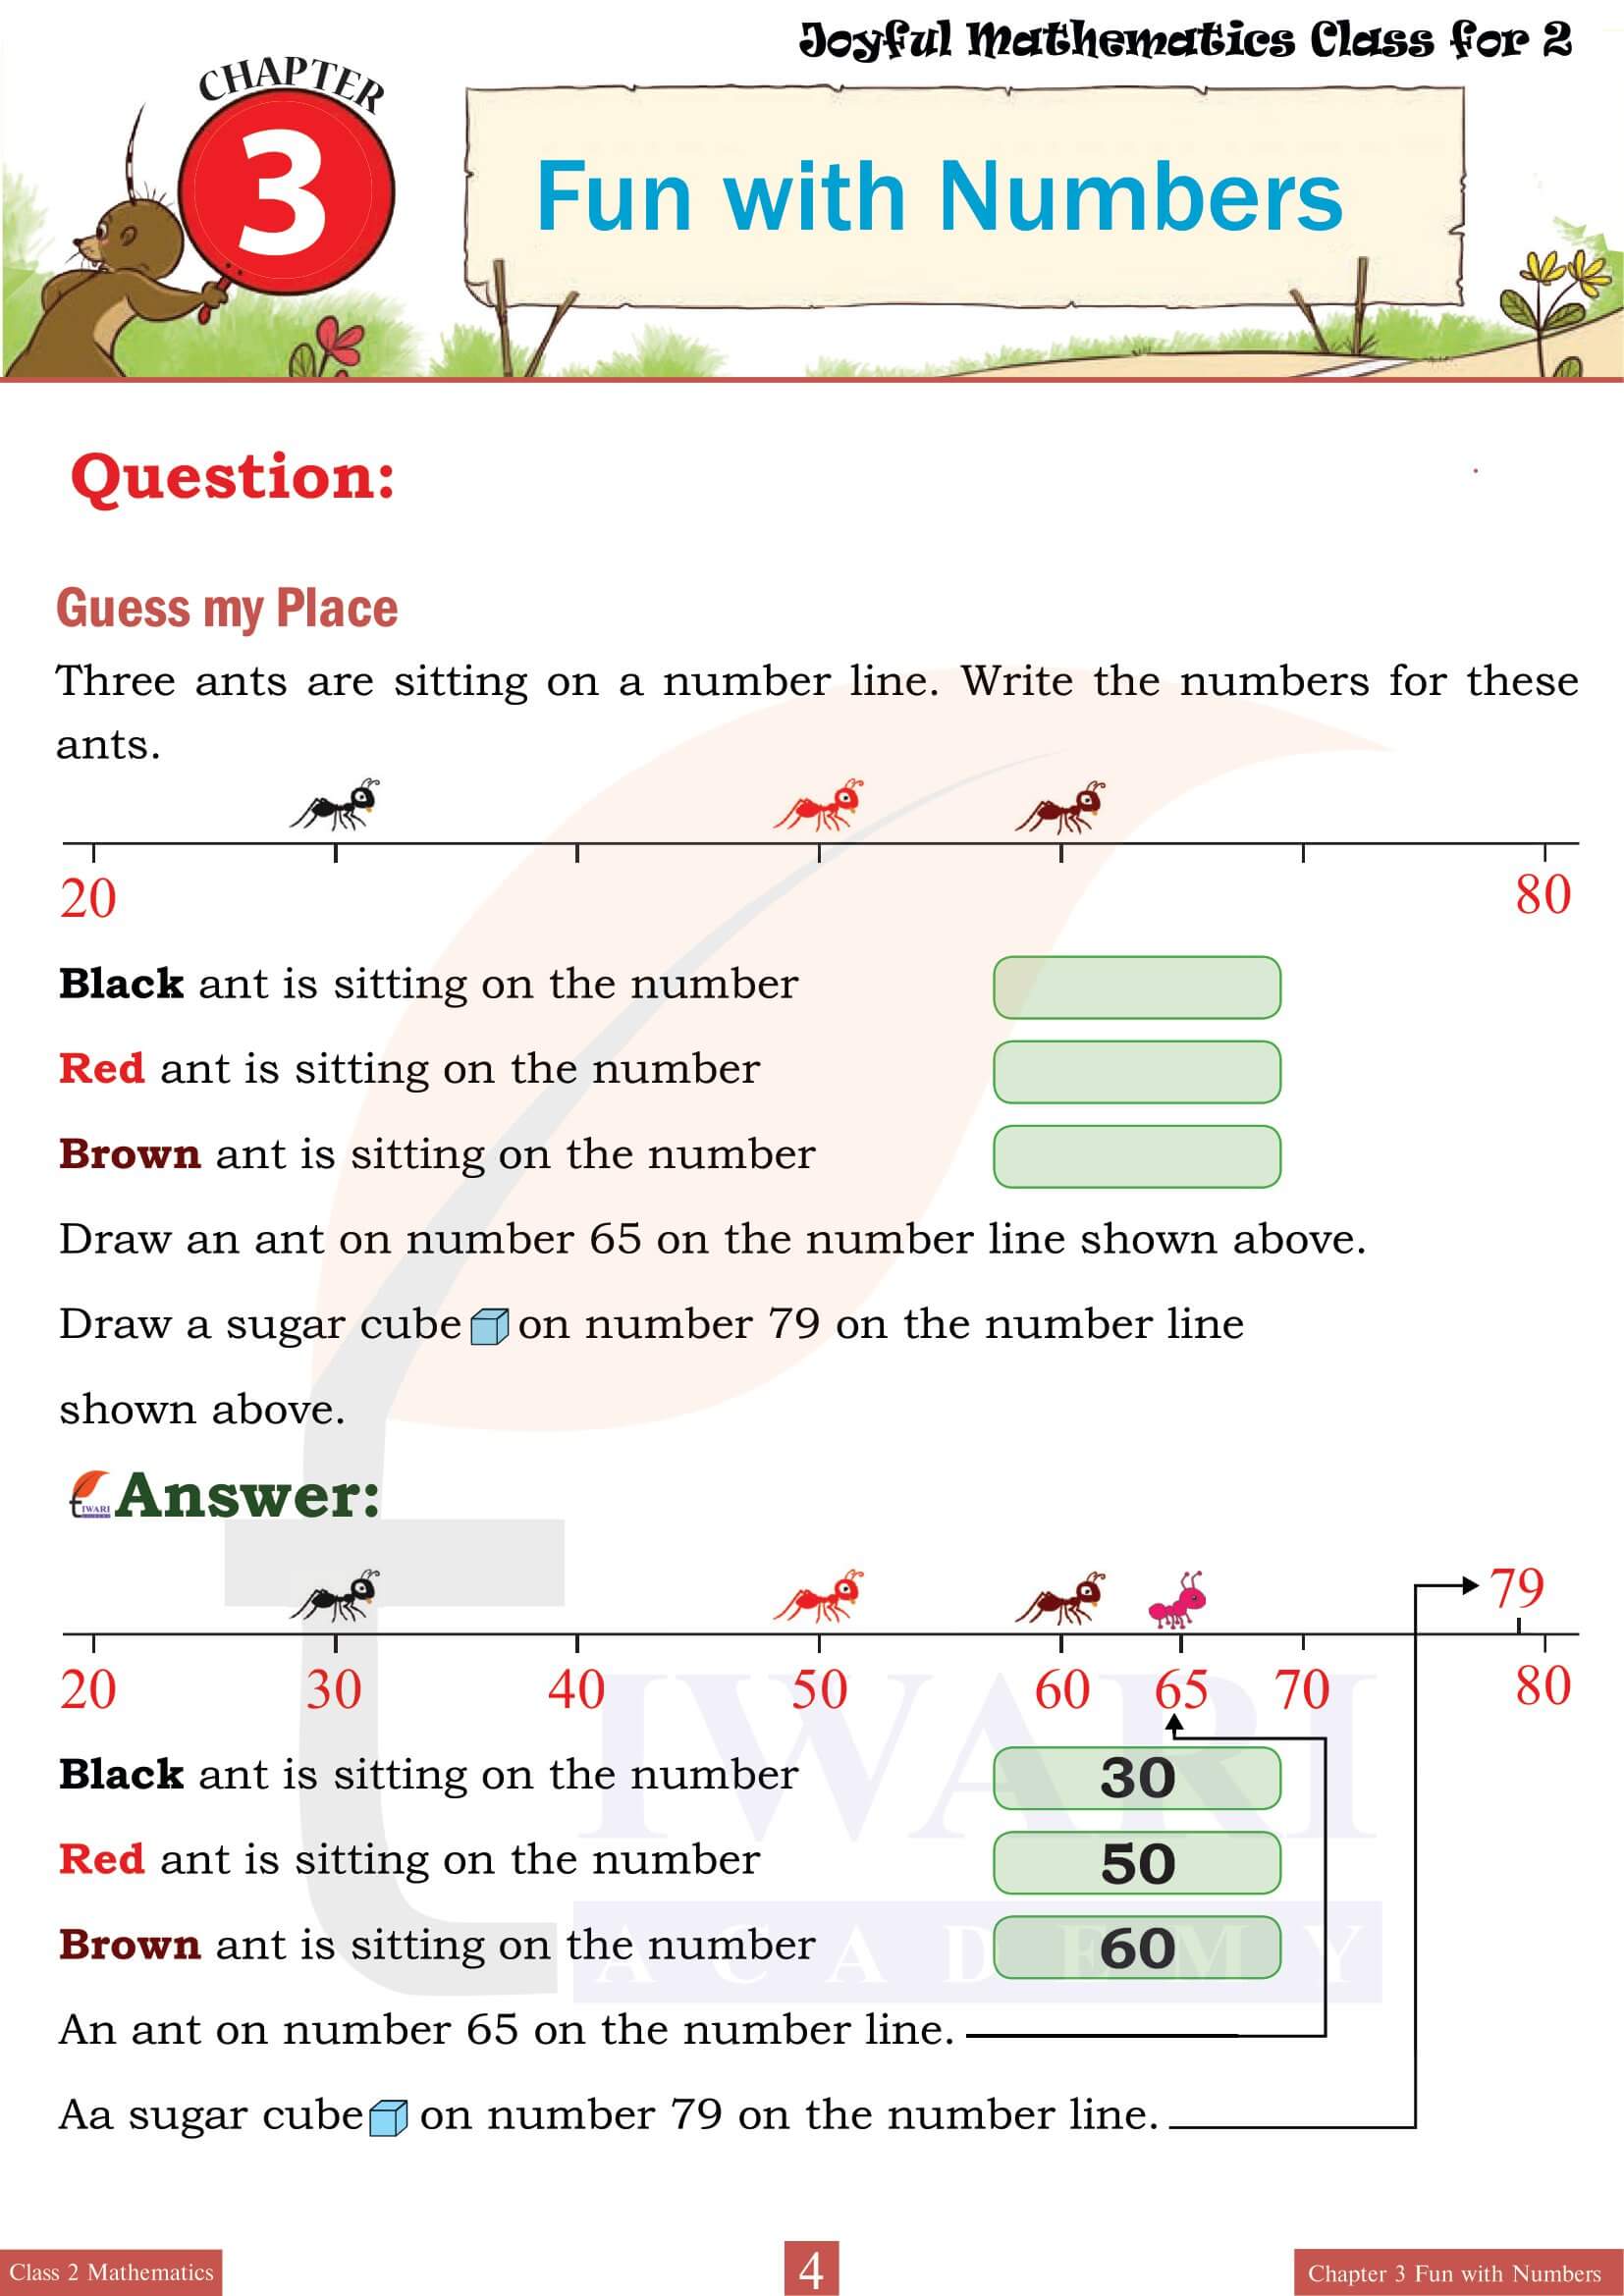 Class 2 Joyful Maths Chapter 3 Fun with Numbers